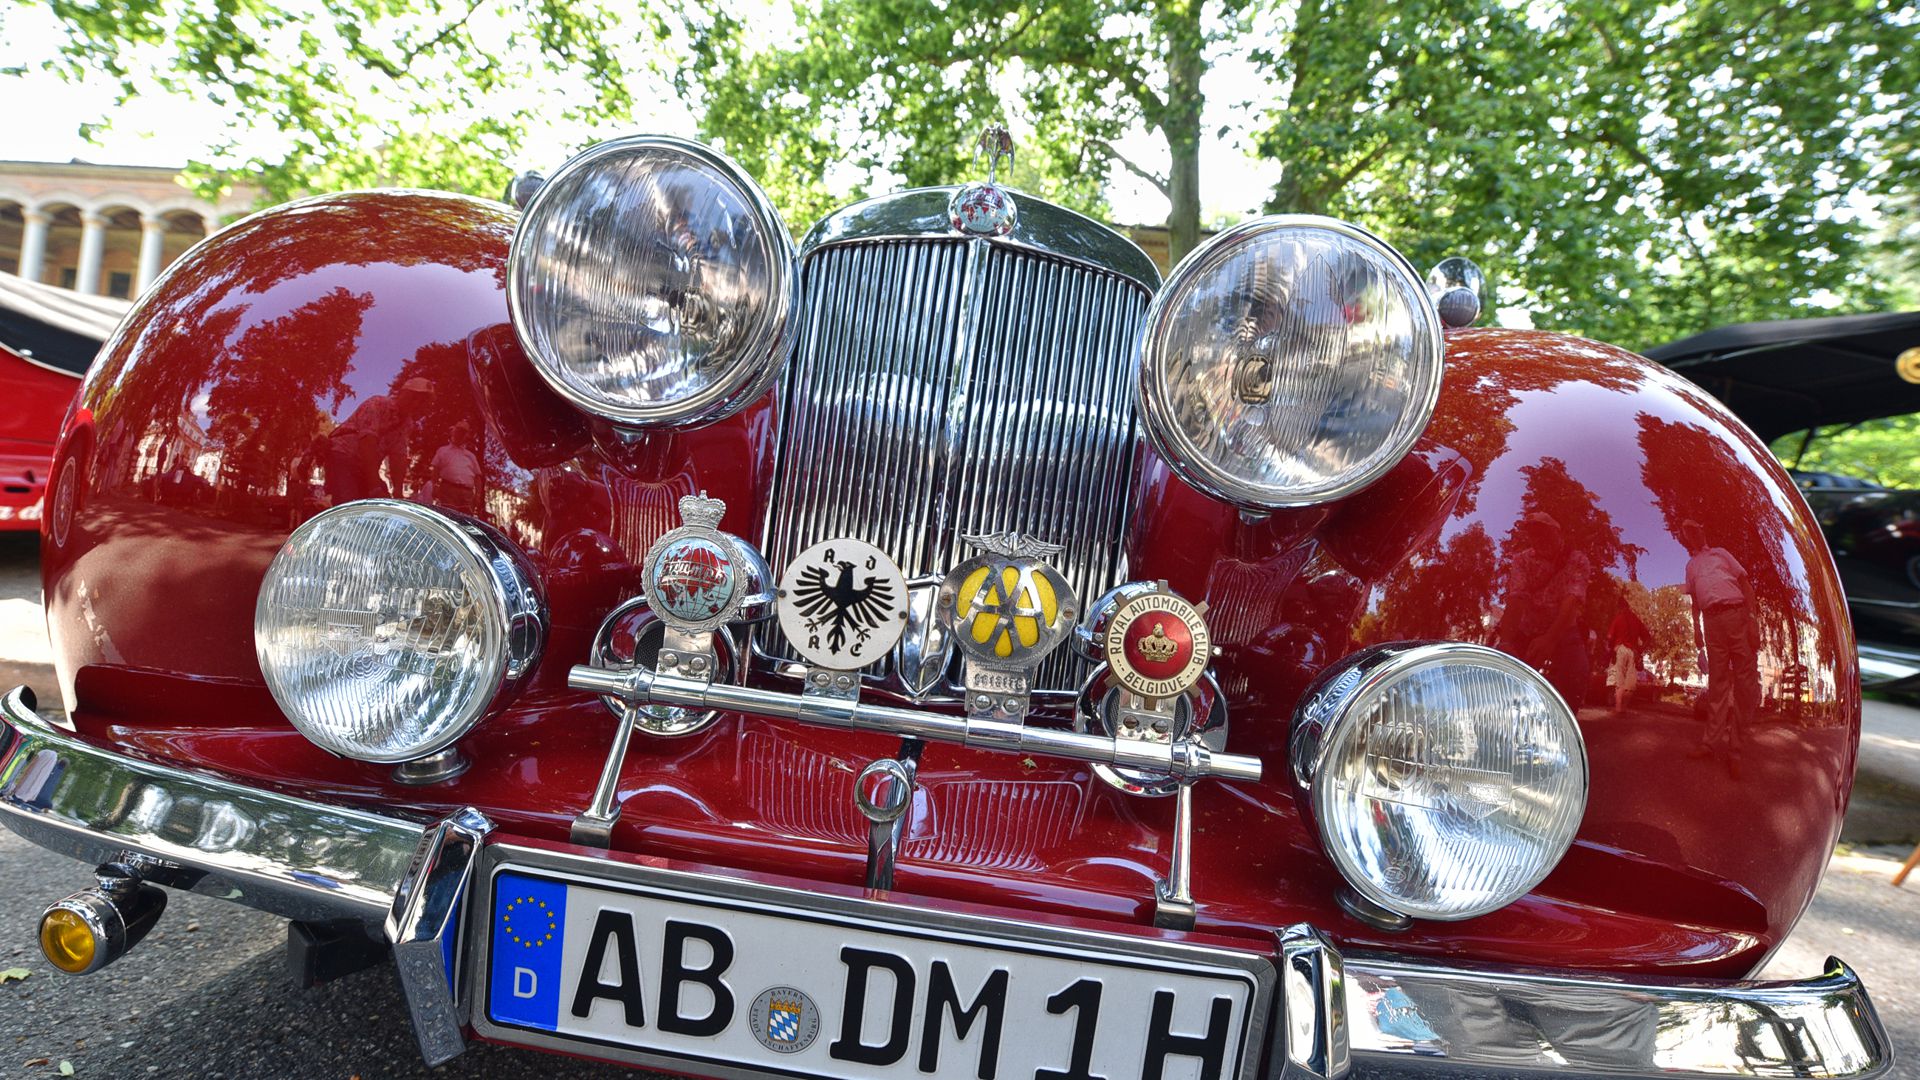 Oldtimer-Meeting Baden-Baden / 279	Triumph	Roadster	1947	1767	63	Noever, M.

